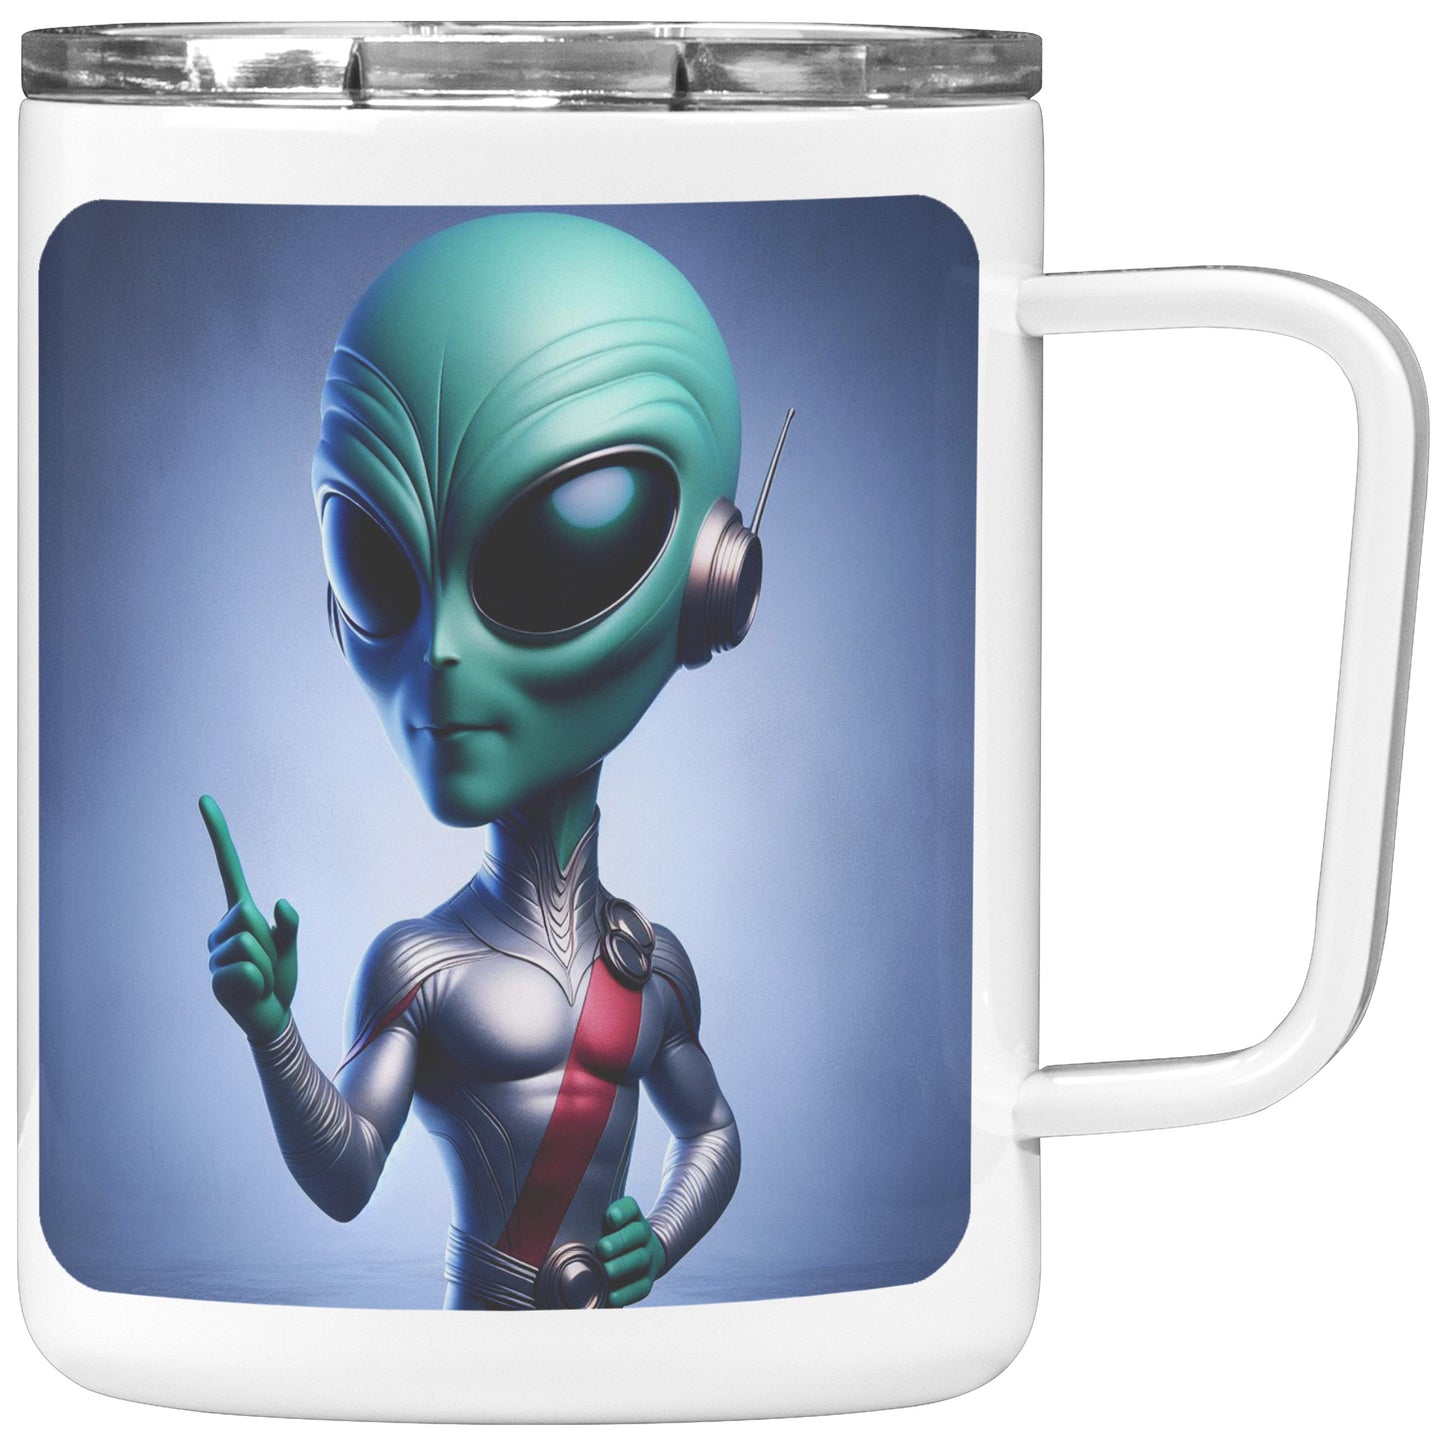 Martian Alien Caricature - Coffee Mug #8